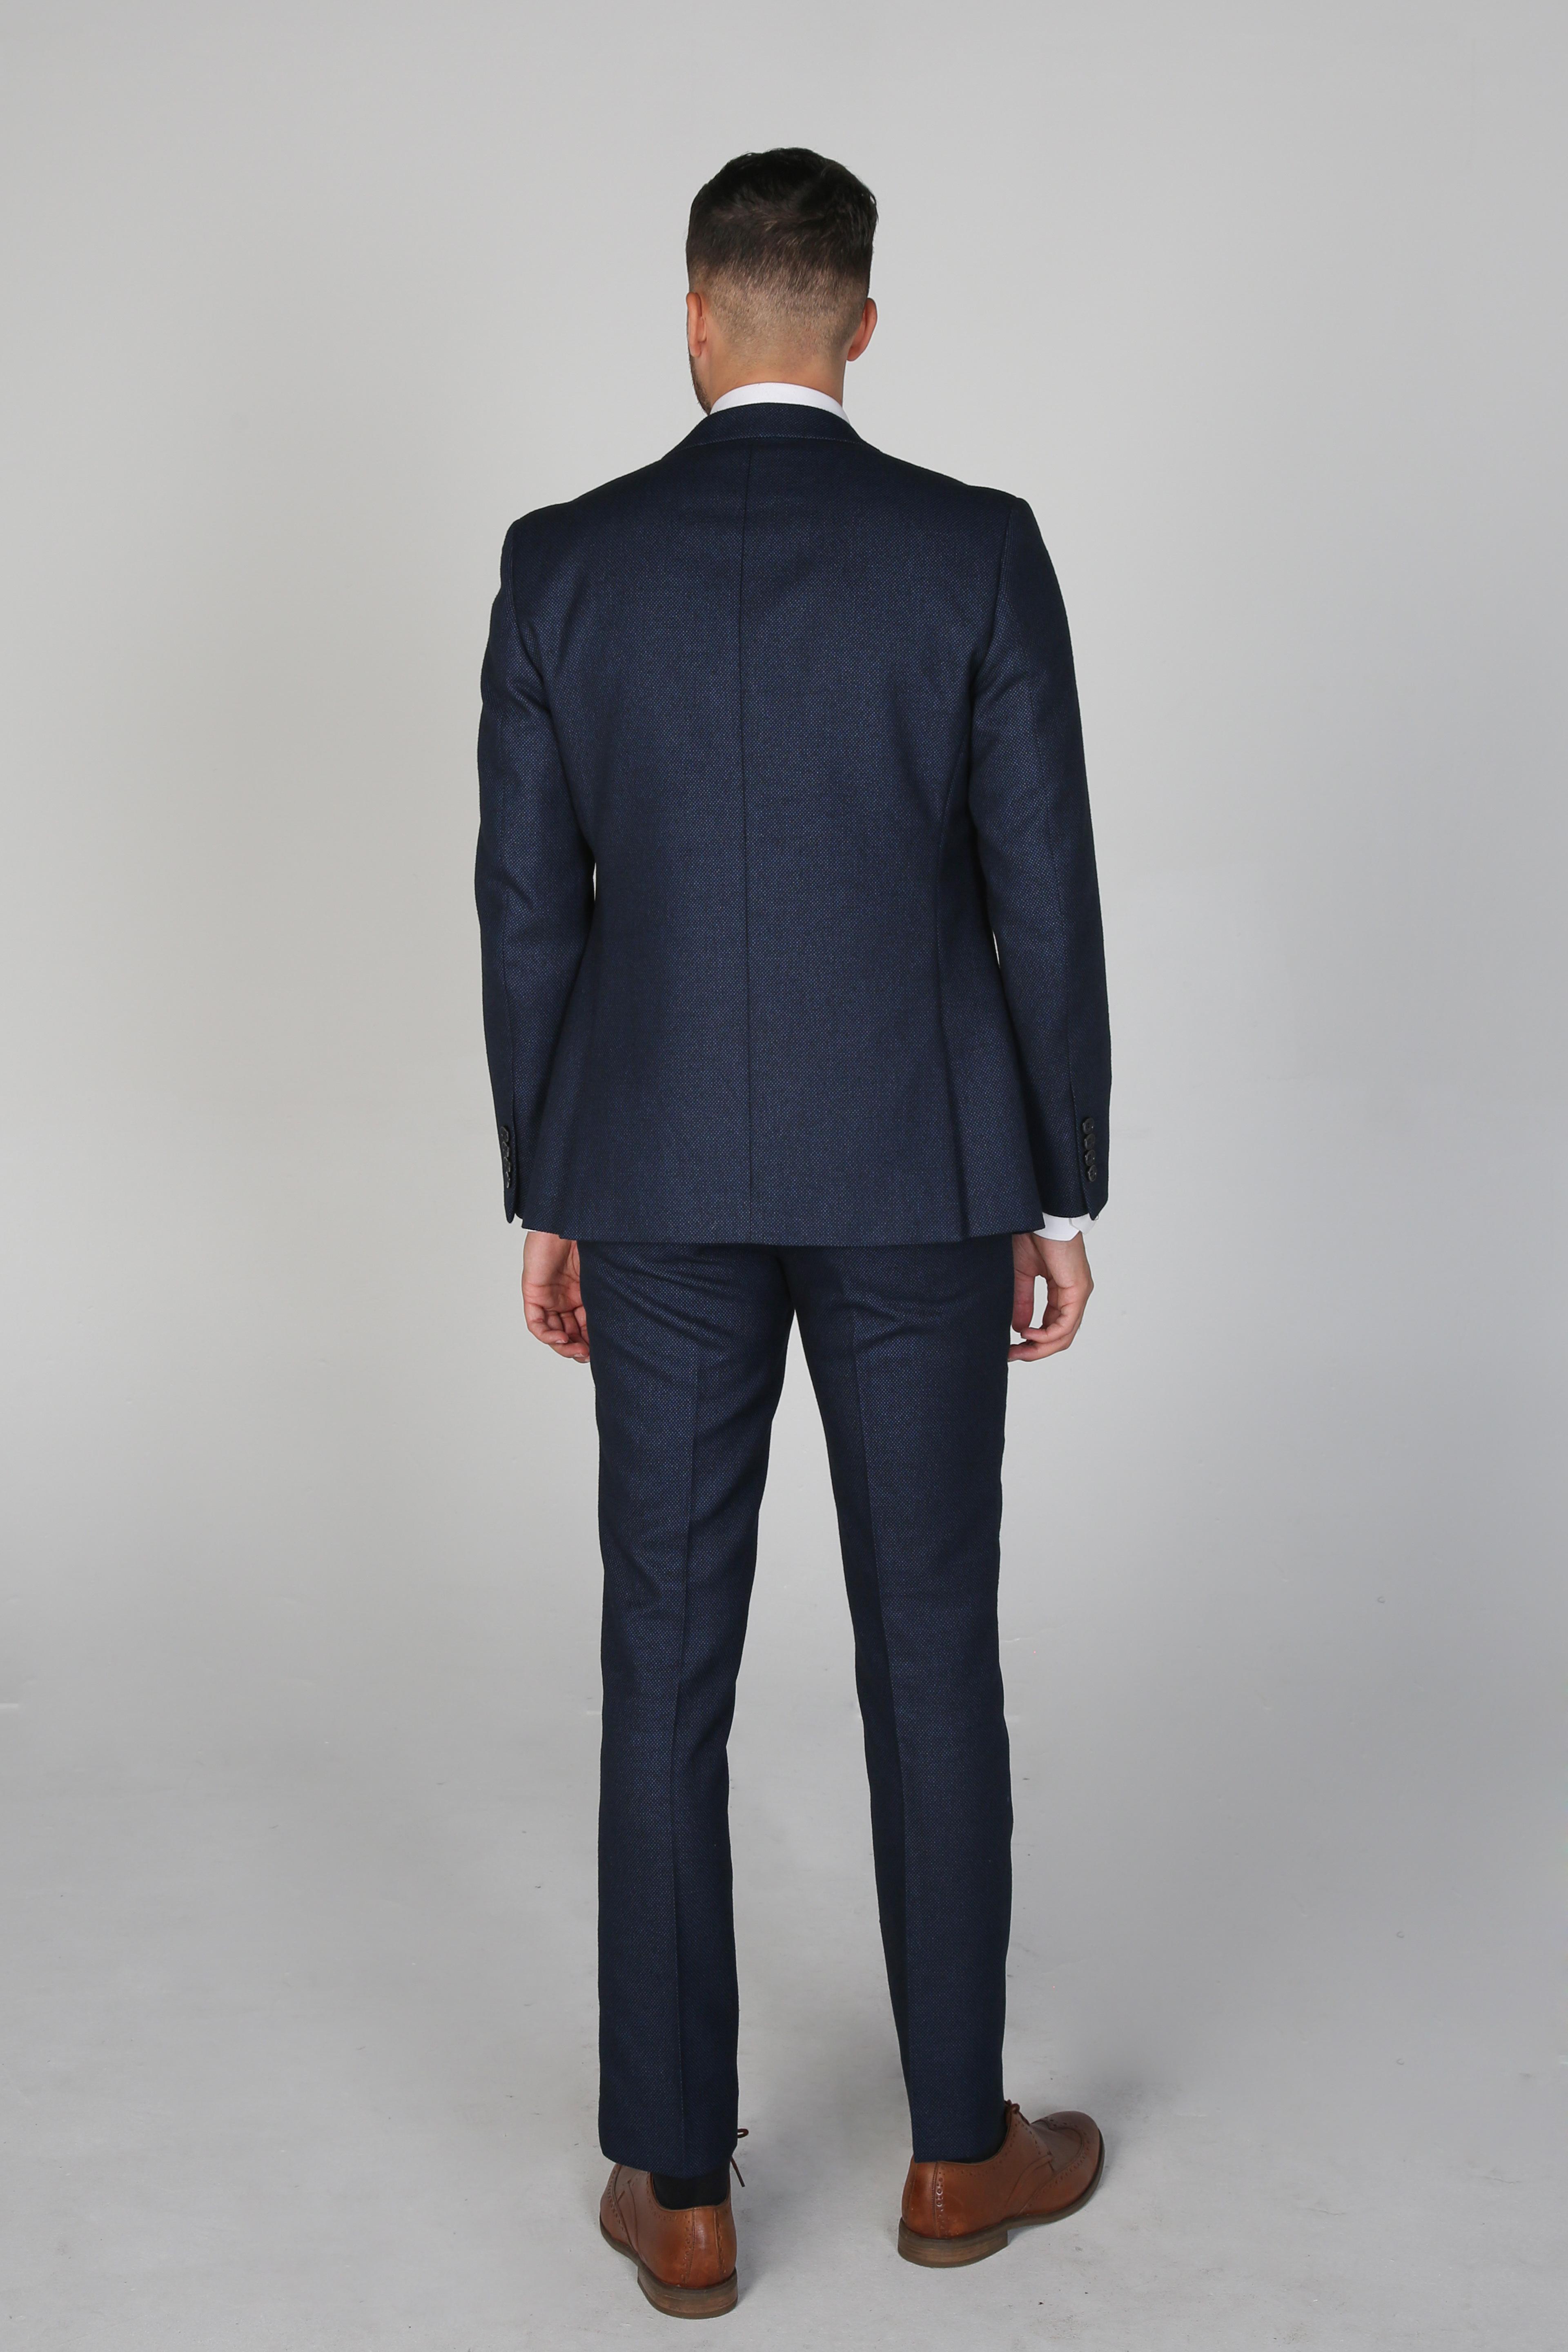 Men's Textured Formal Navy Blue Suit - ARTHUR - Navy Blue